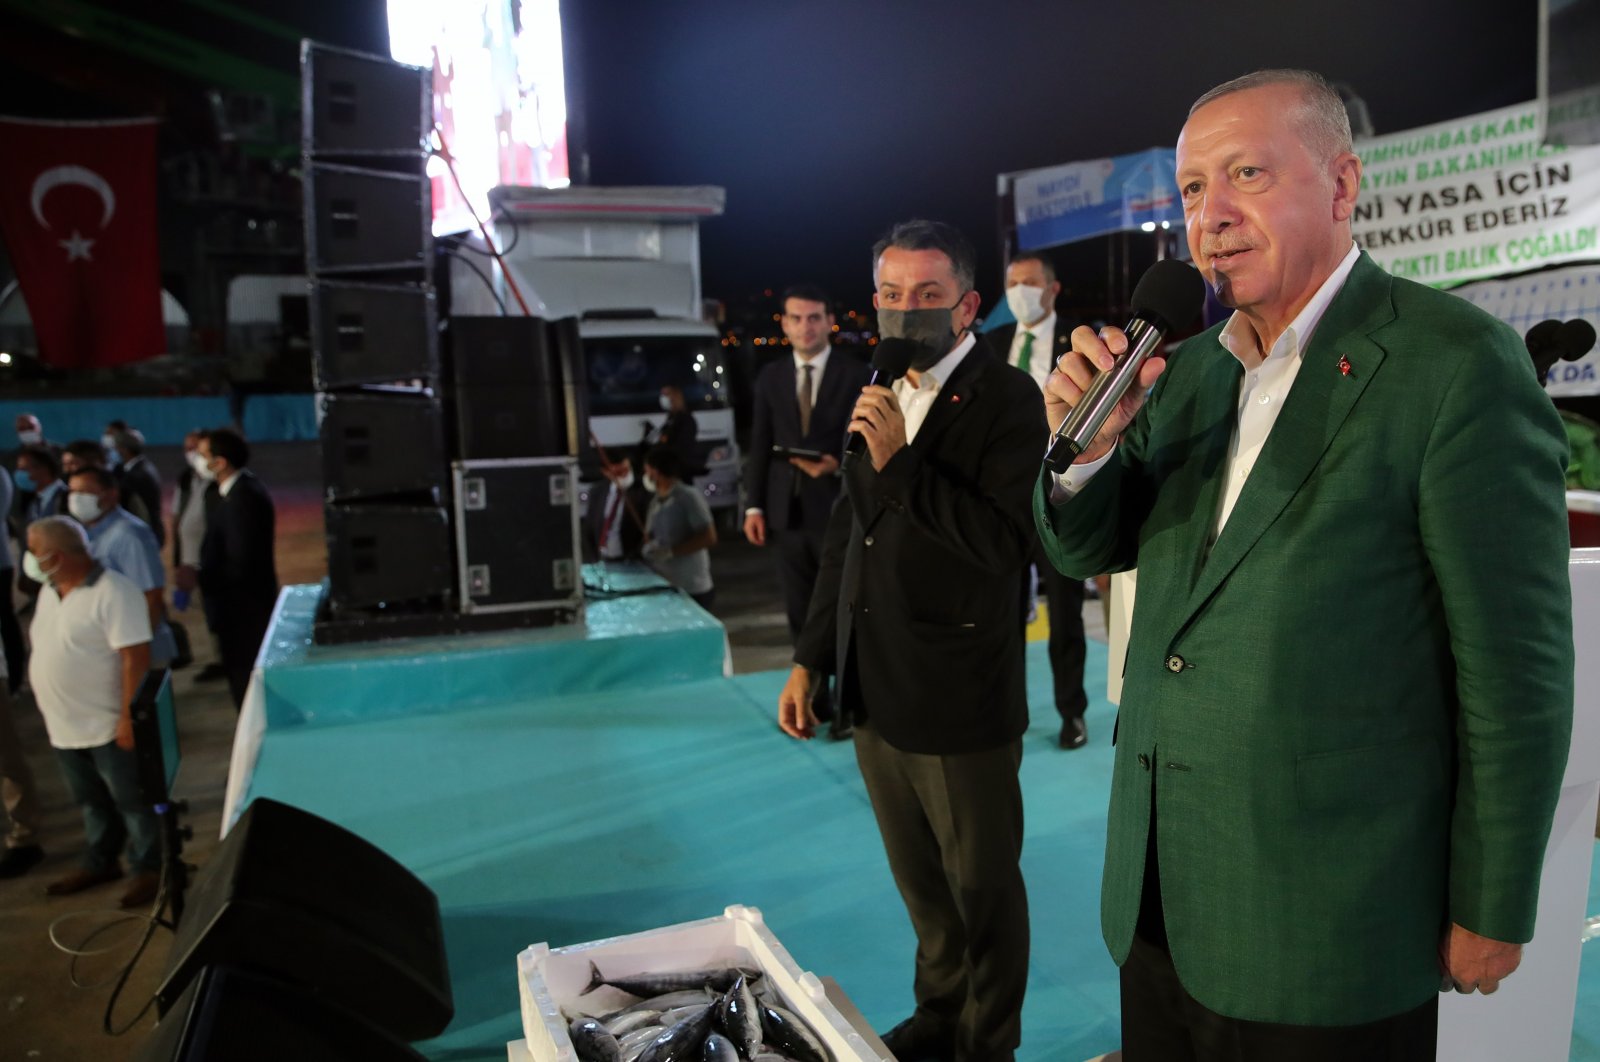 President Recep Tayyip Erdoğan speaking at an event in Giresun, Turkey, Aug. 31, 2020. (AA Photo)